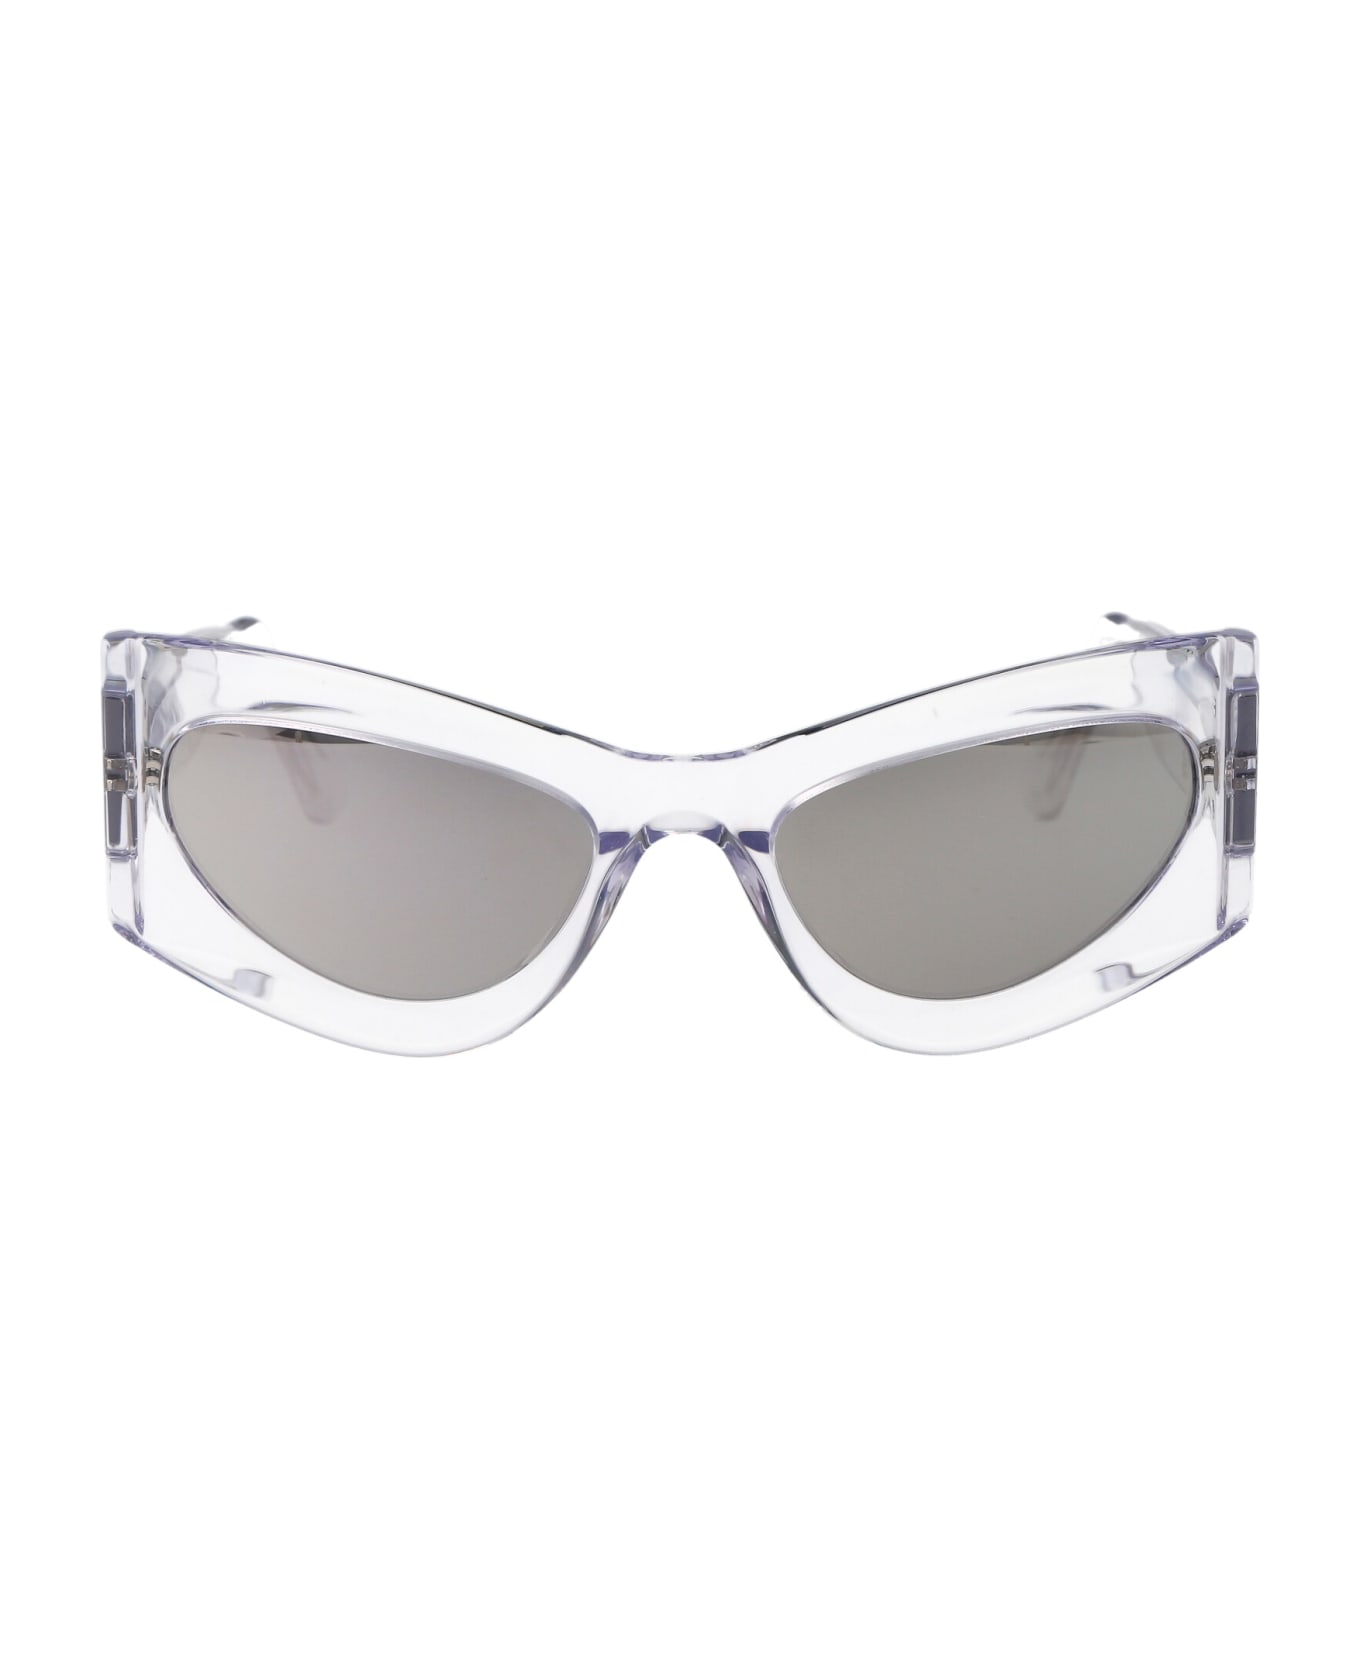 GCDS Gd0036 Sunglasses - 26C CRYSTAL